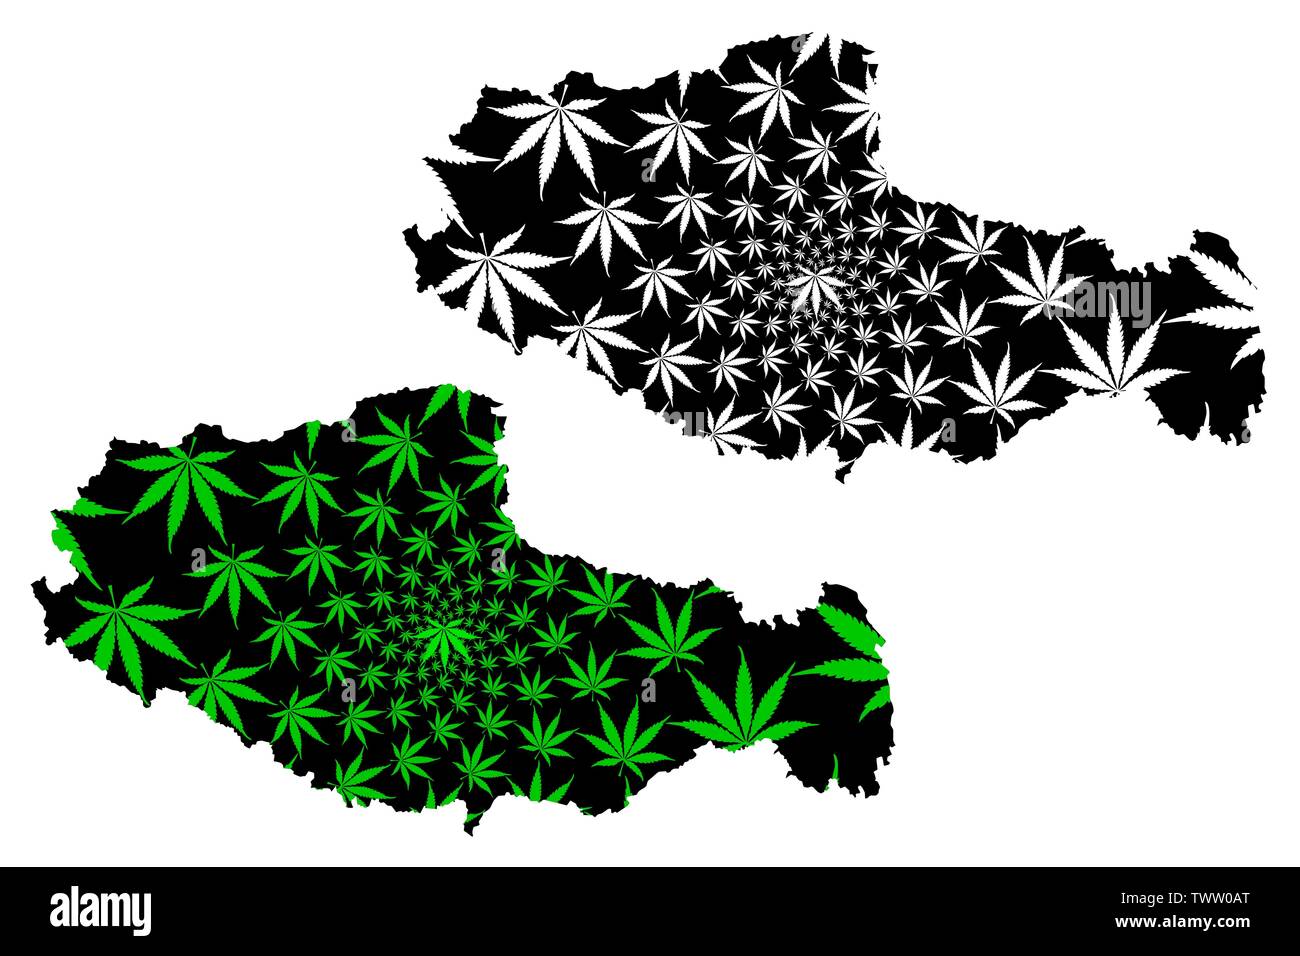 Tibet Autonomous Region (People's Republic of China, PRC) map is designed cannabis leaf green and black, Xizang Autonomous Region map made of marijuan Stock Vector